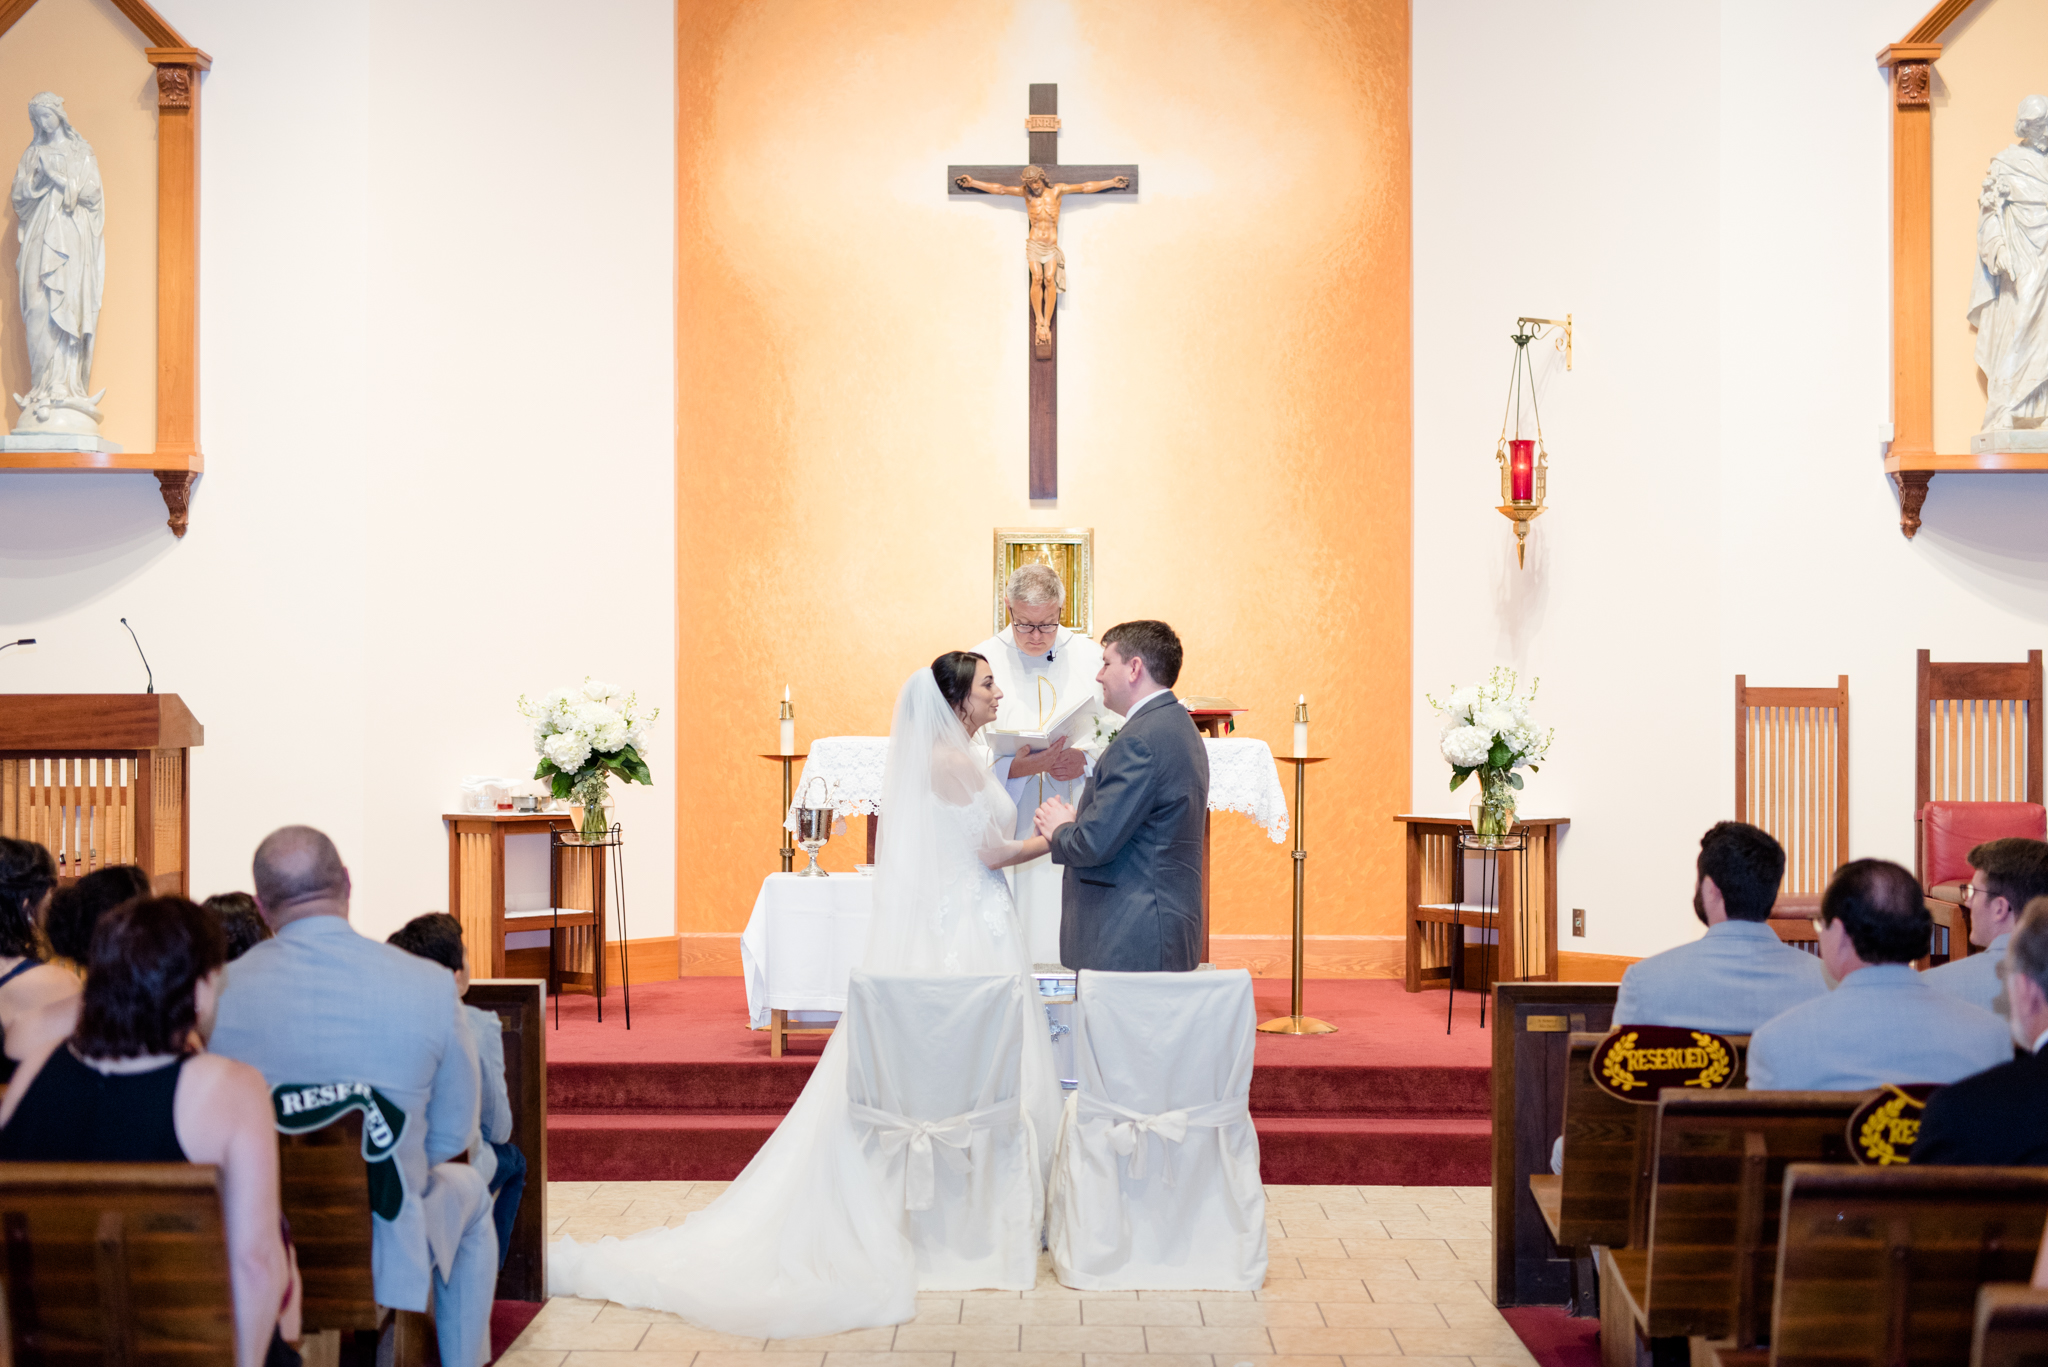 Bride and groom recite vows.